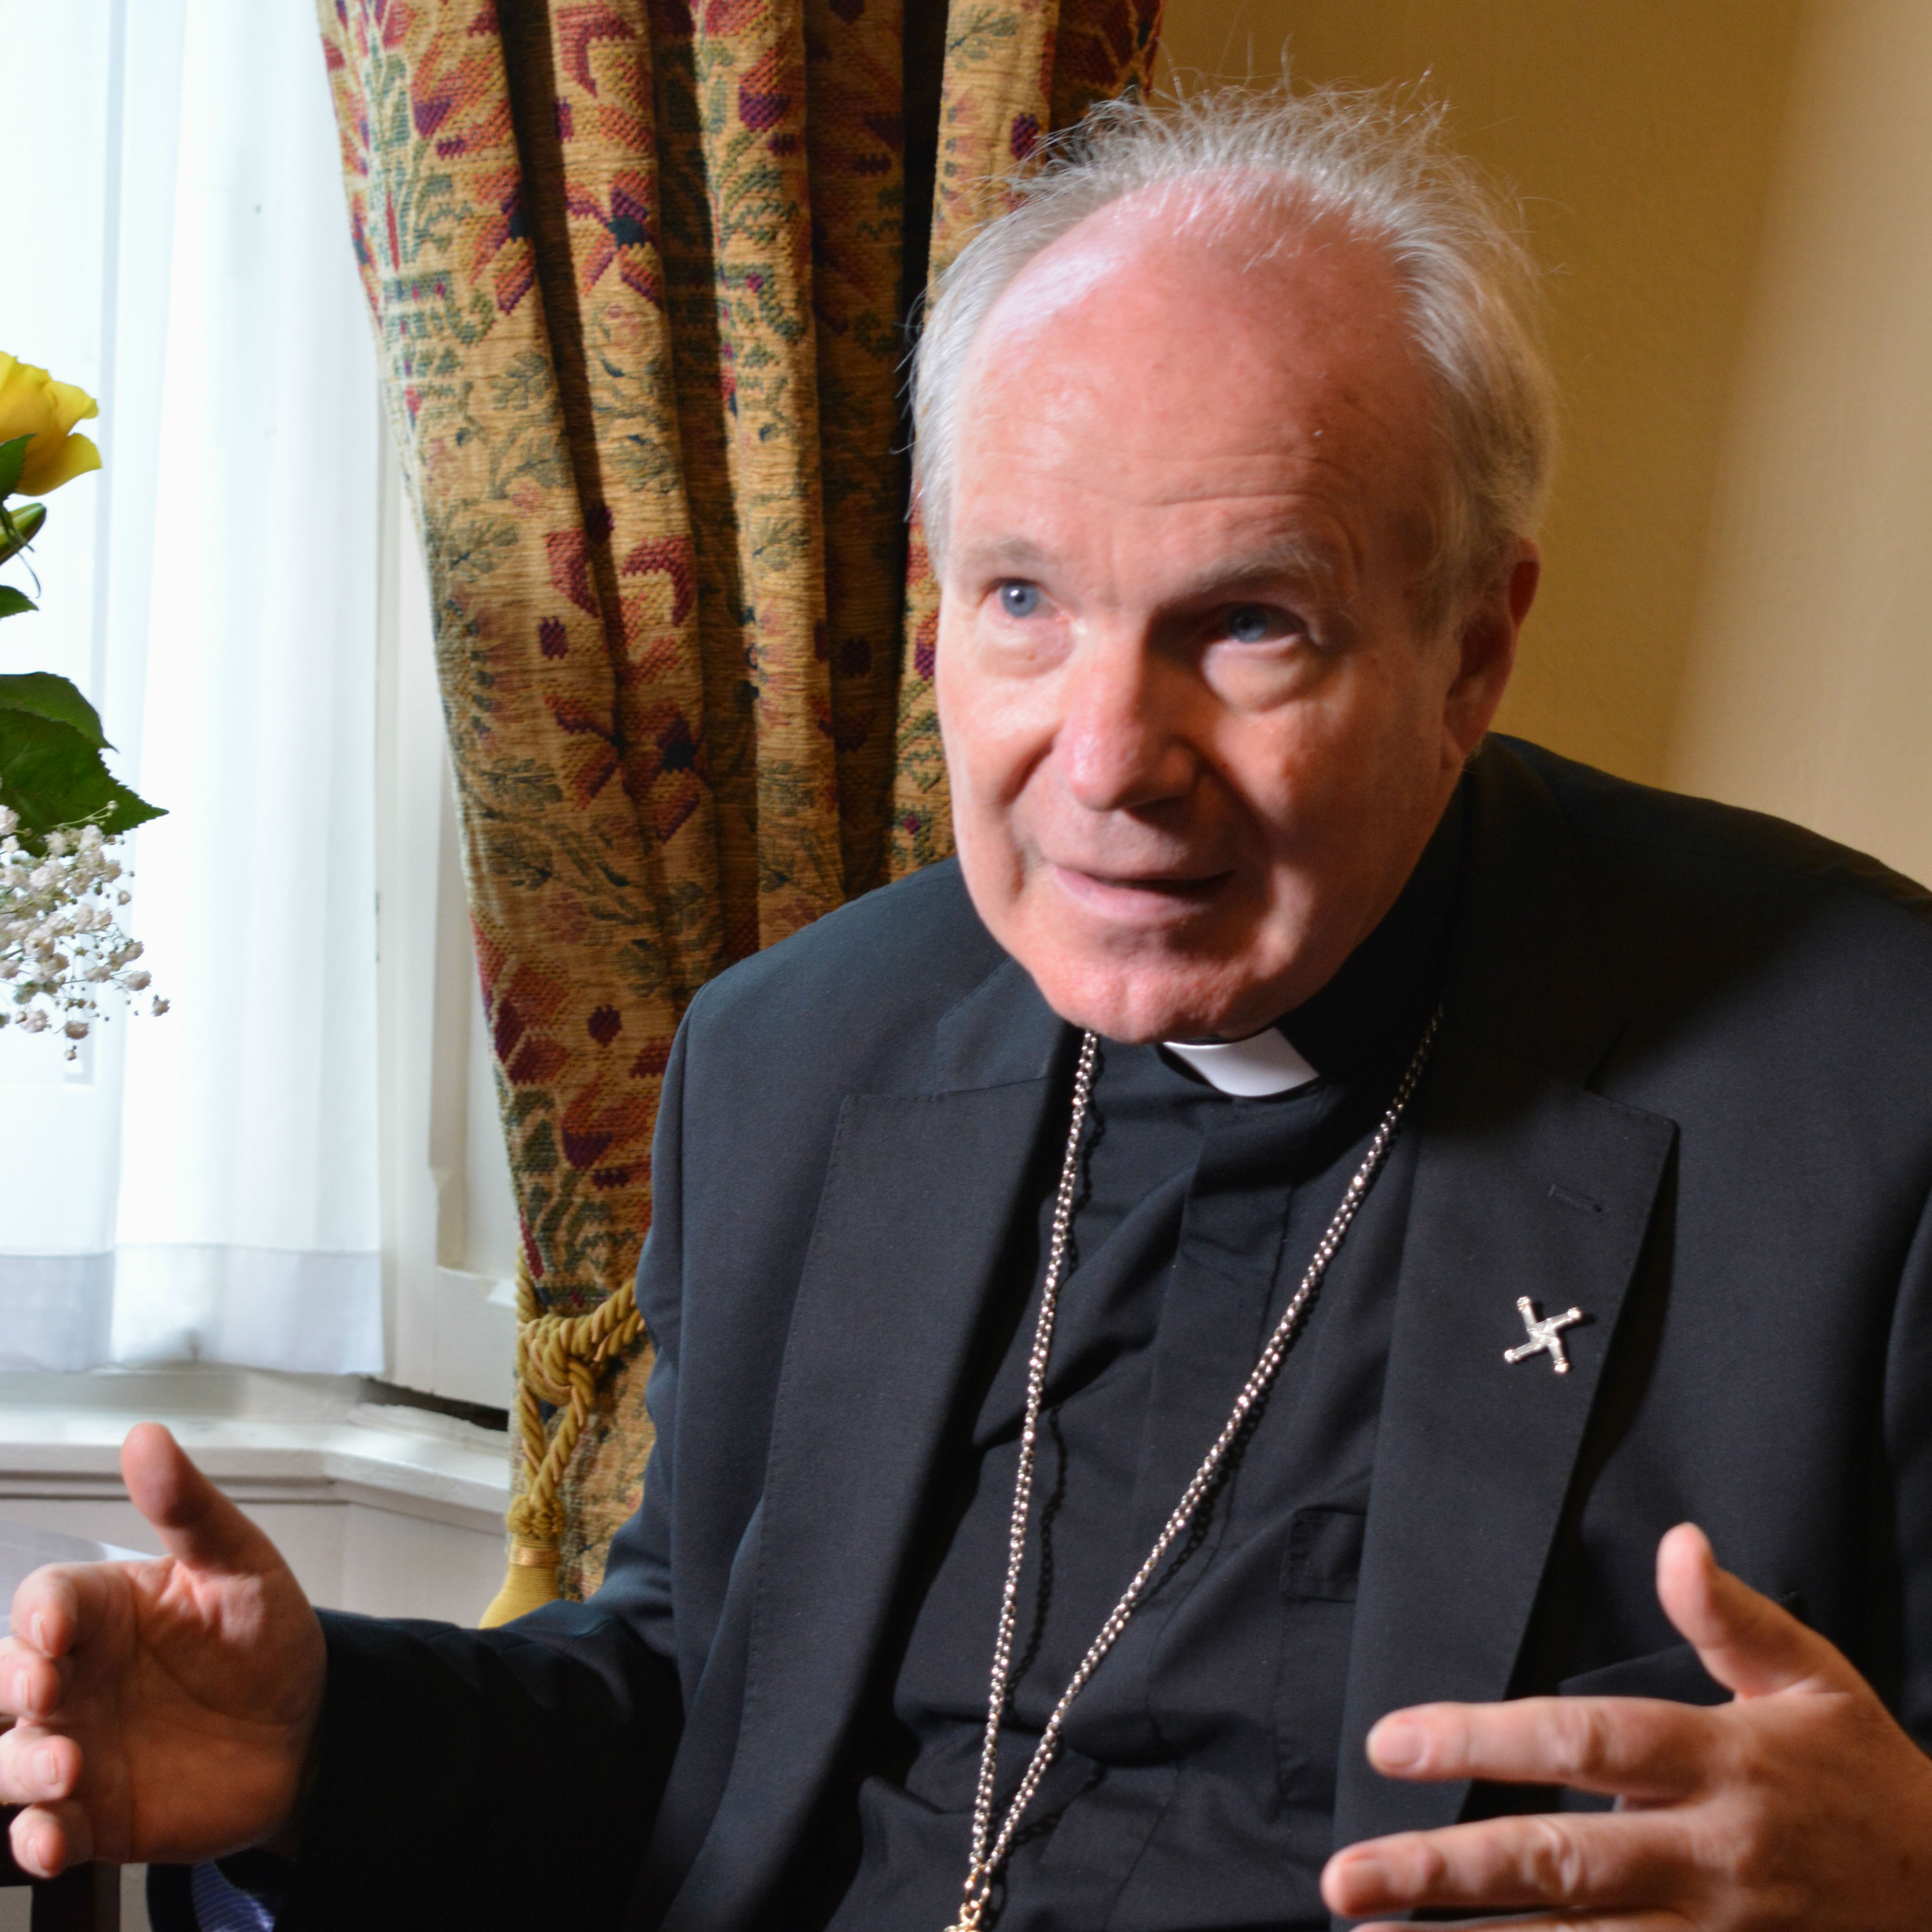 Cardinal Schönborn rejects Cardinal Müller's criticism that his handling of Amoris Laetitia debate is 'not convincing' 